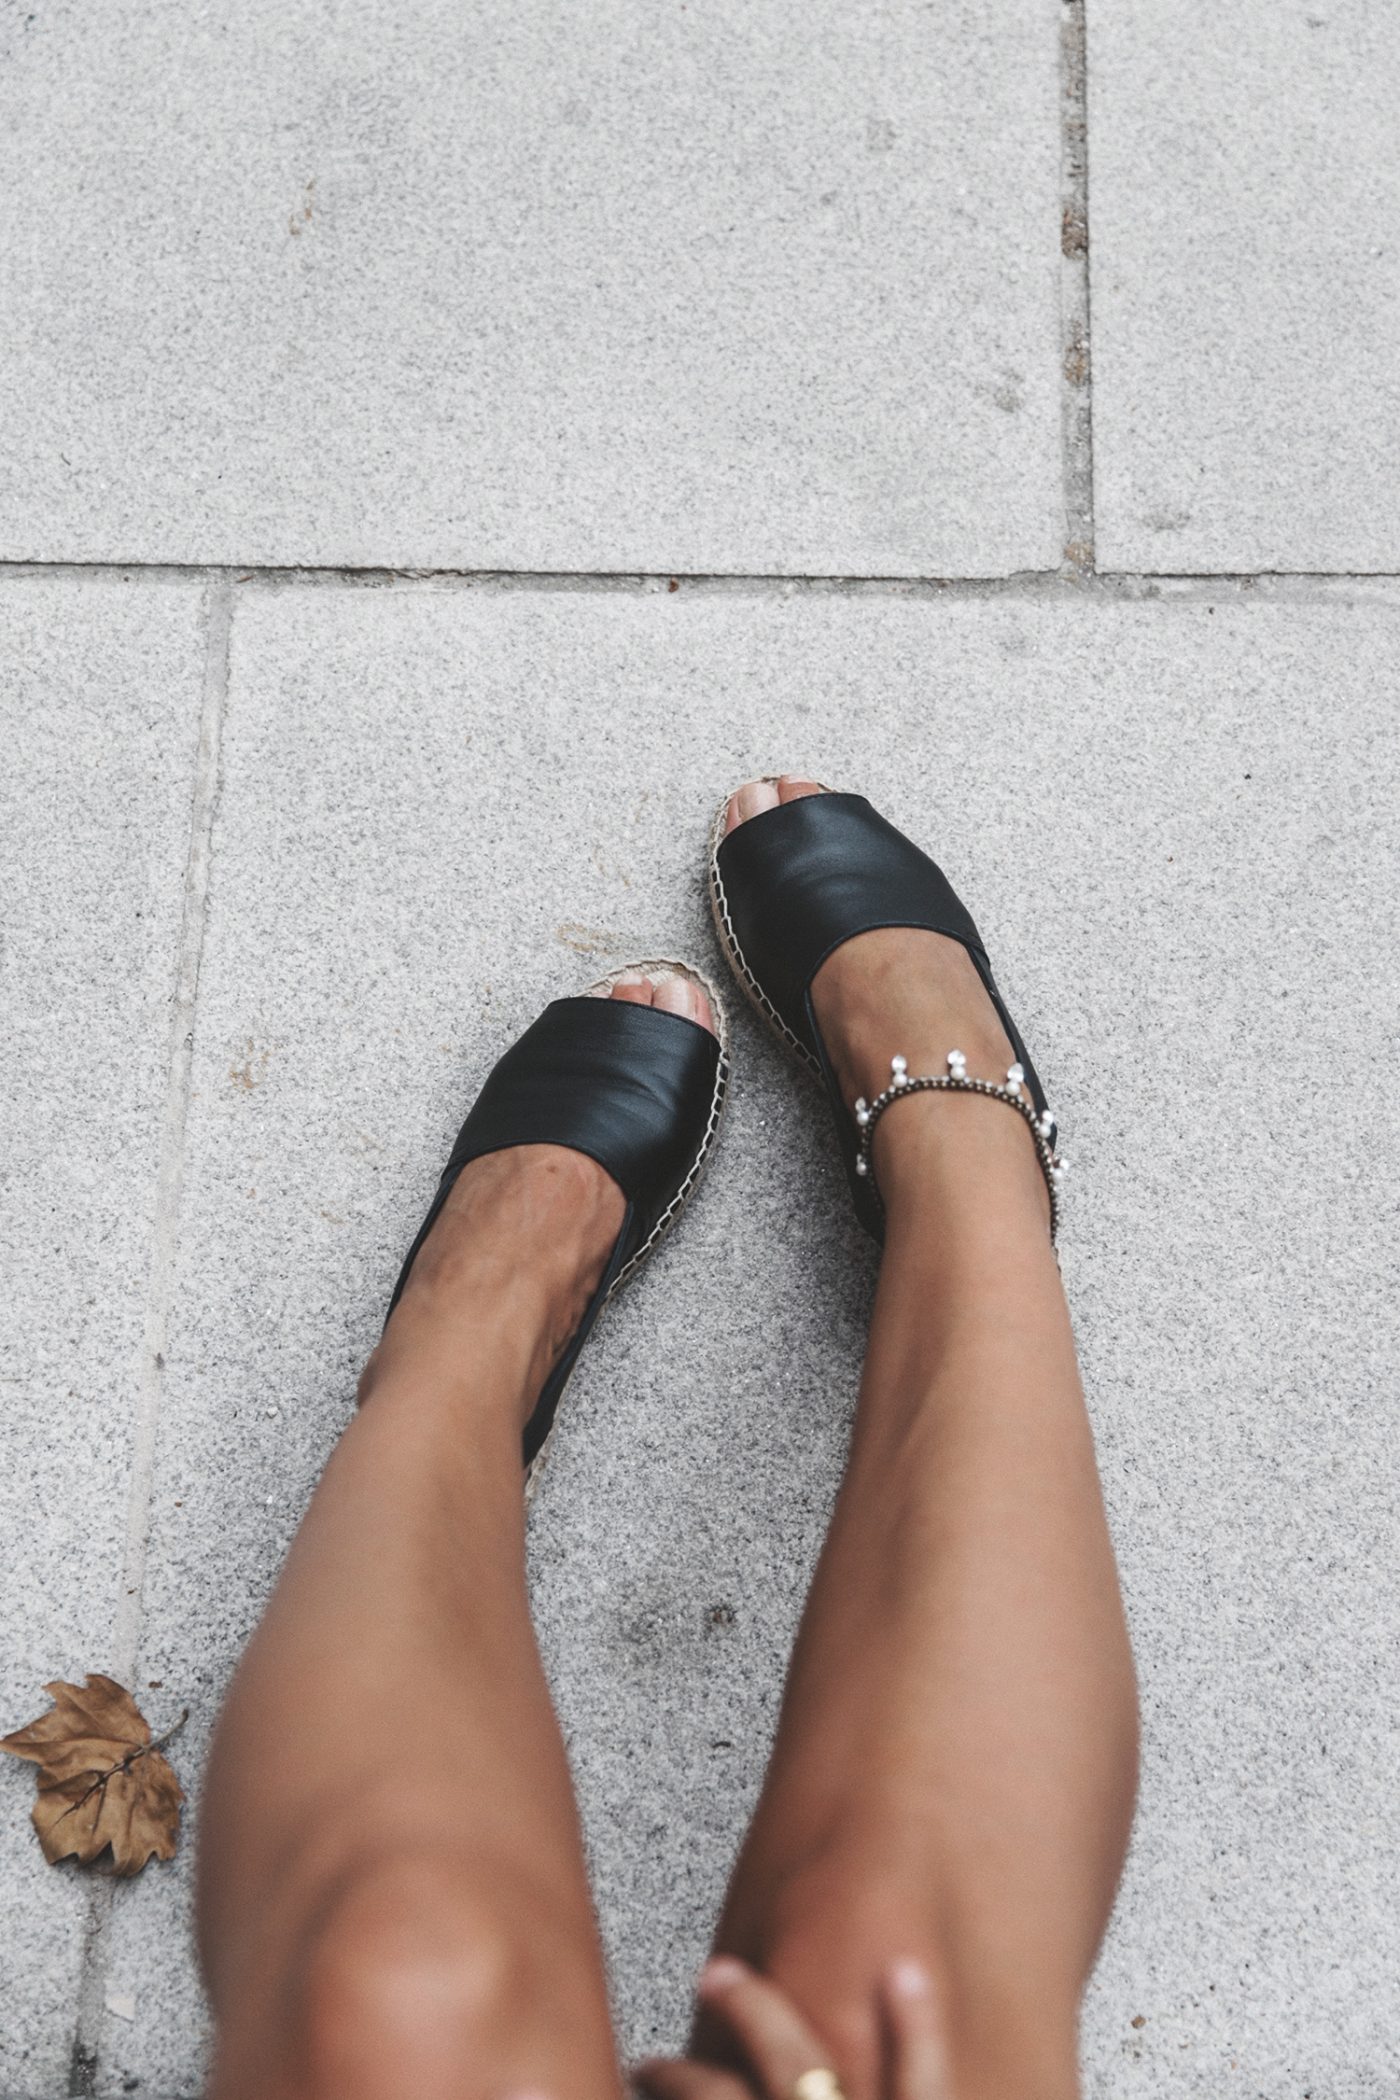 Summery_knit-Levis_Vintage_Skirt-Zalando_Espadrilles-Black_Sandals-Collage_Vintage_Horn_Necklace-Outfit-Street_Style-50